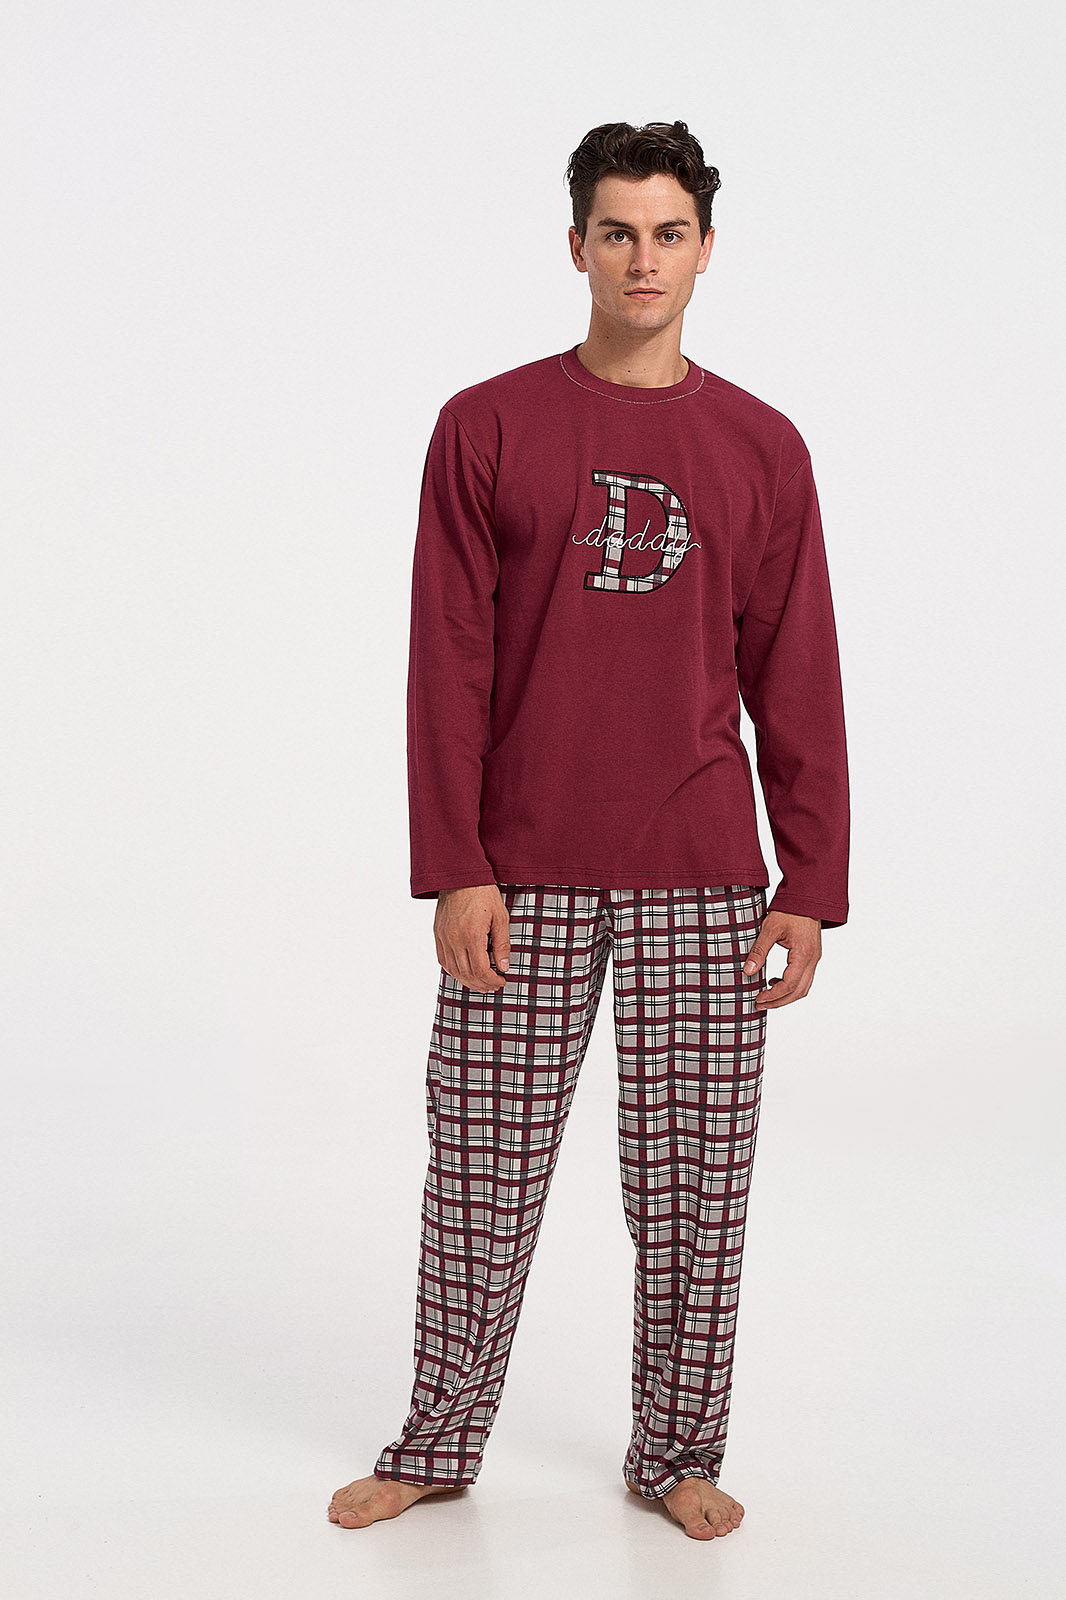 Mens Pajamas GALAXY DADDY with burgundy plaid pants